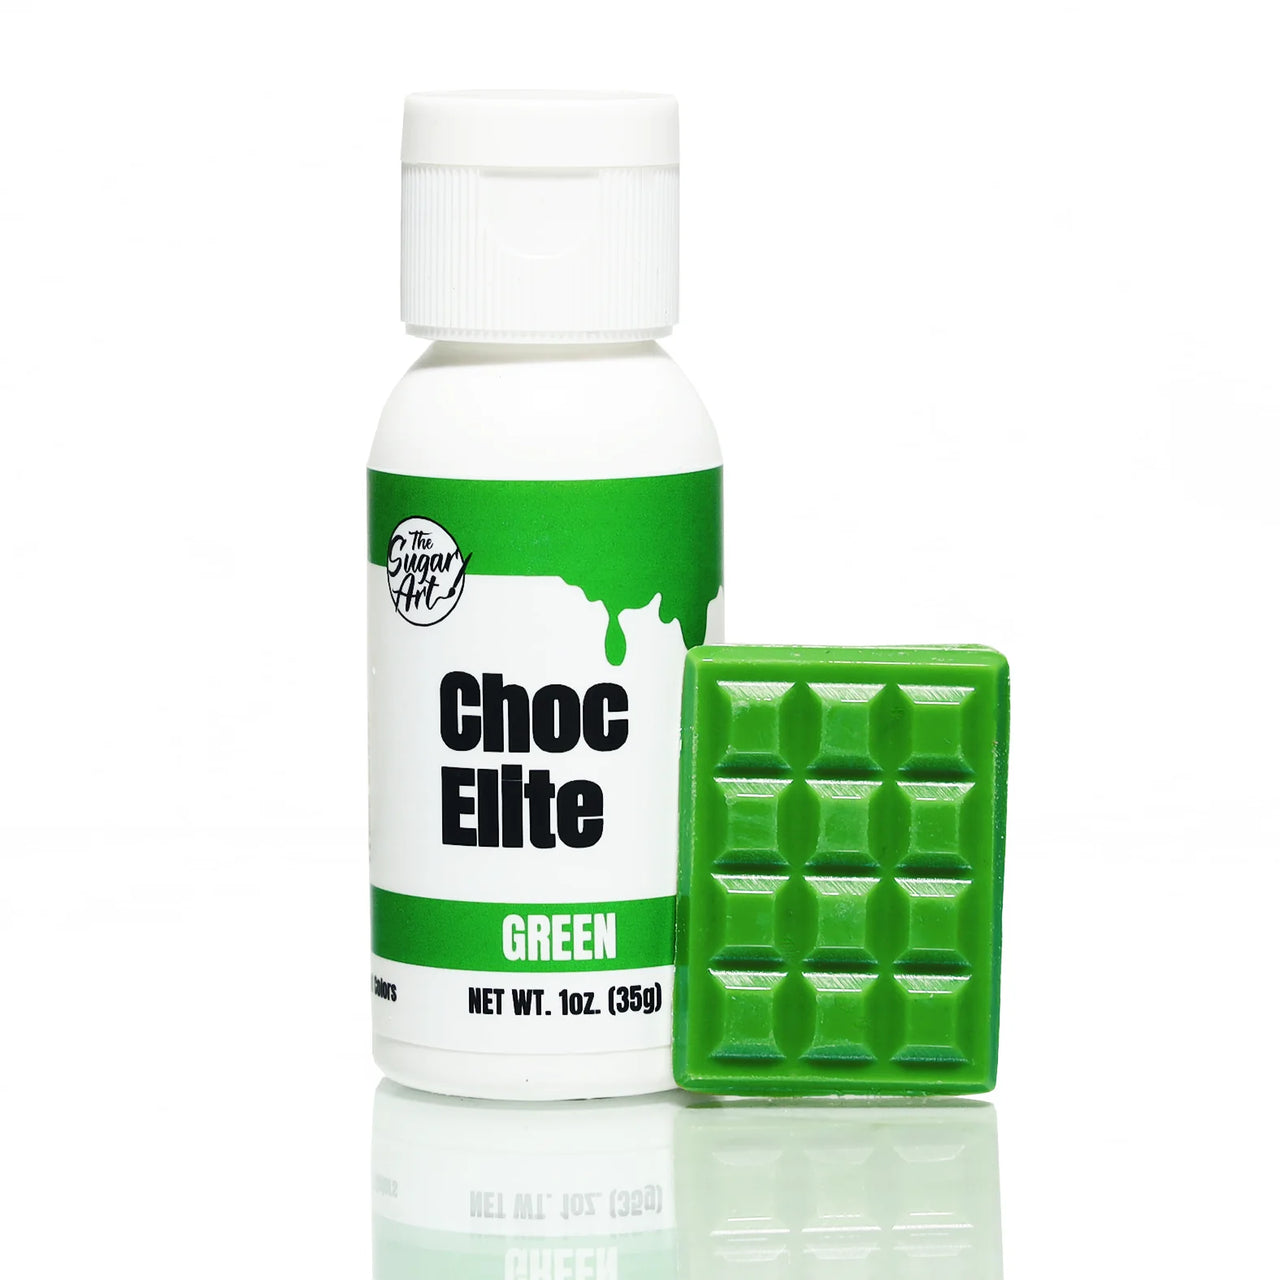 Green Choc Elite 1oz (35g)